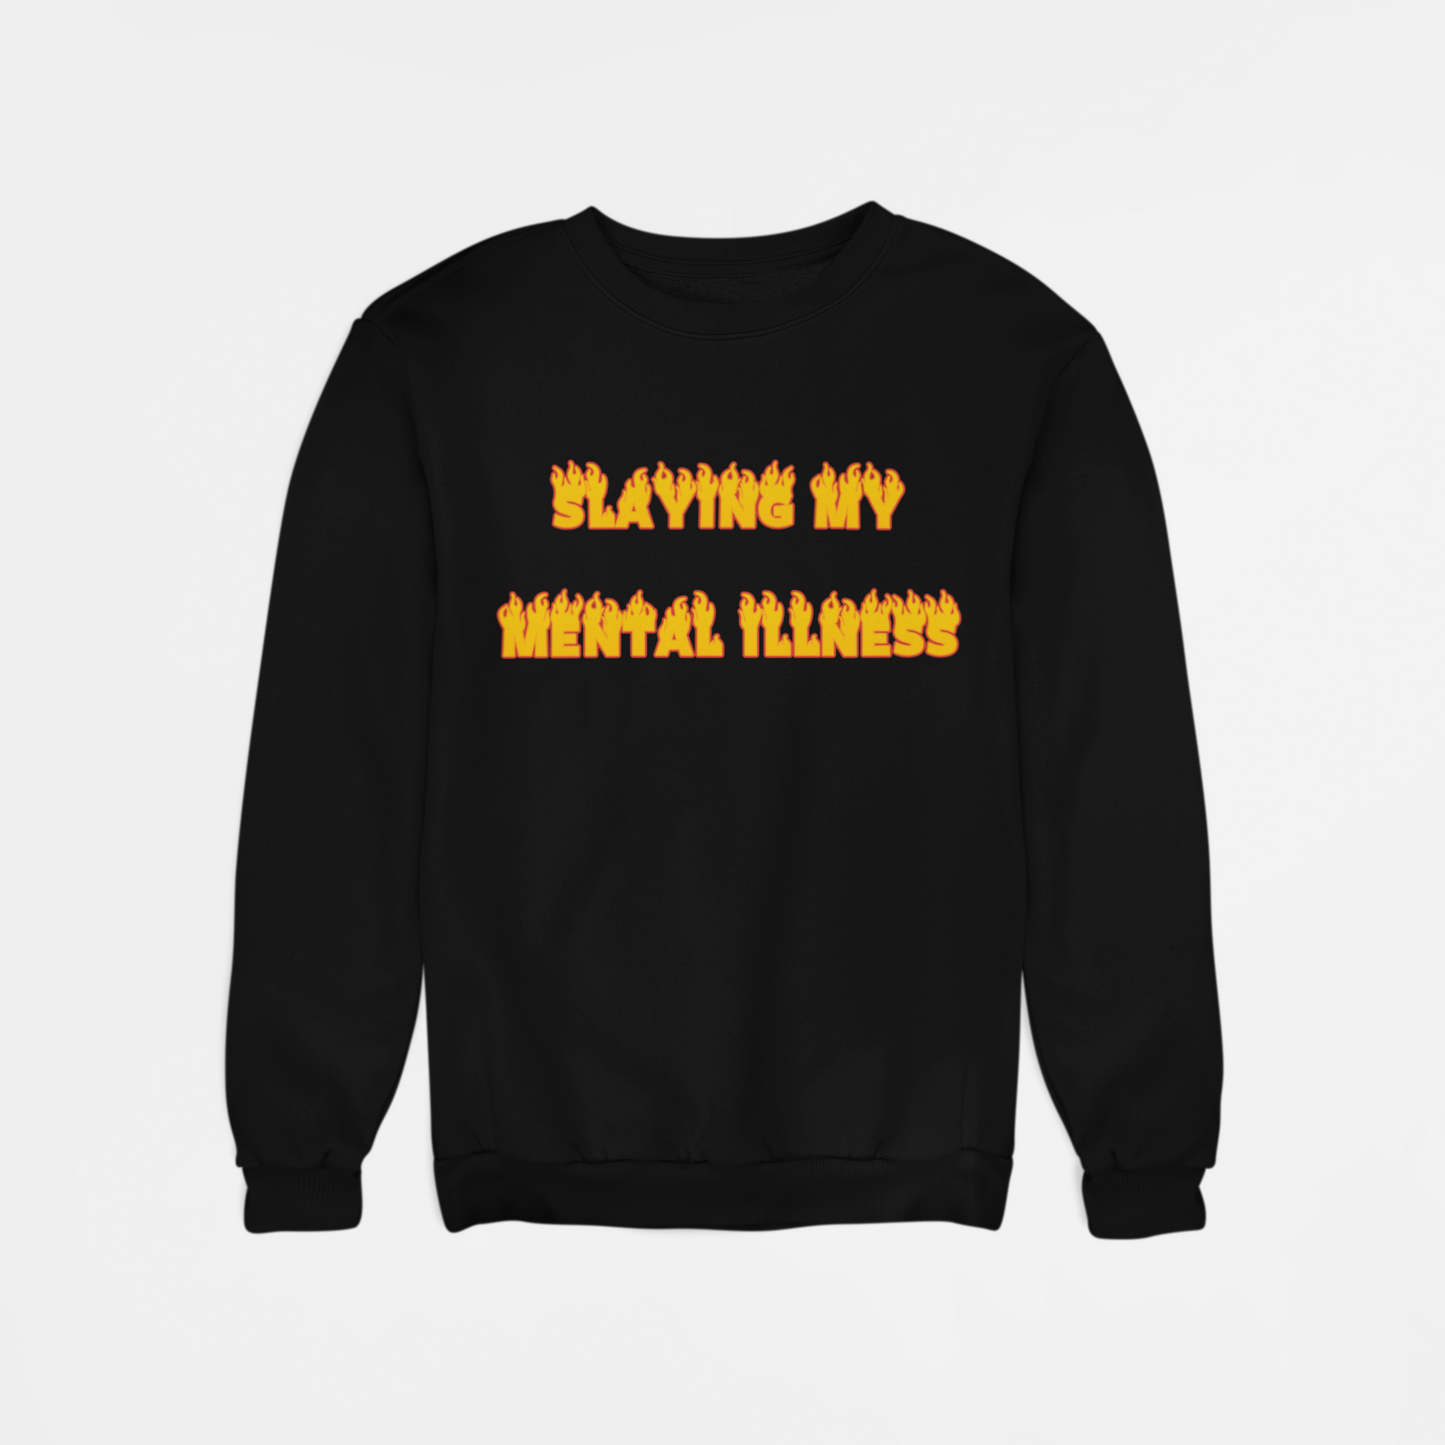 Slaying My Mental Illness sweatshirt